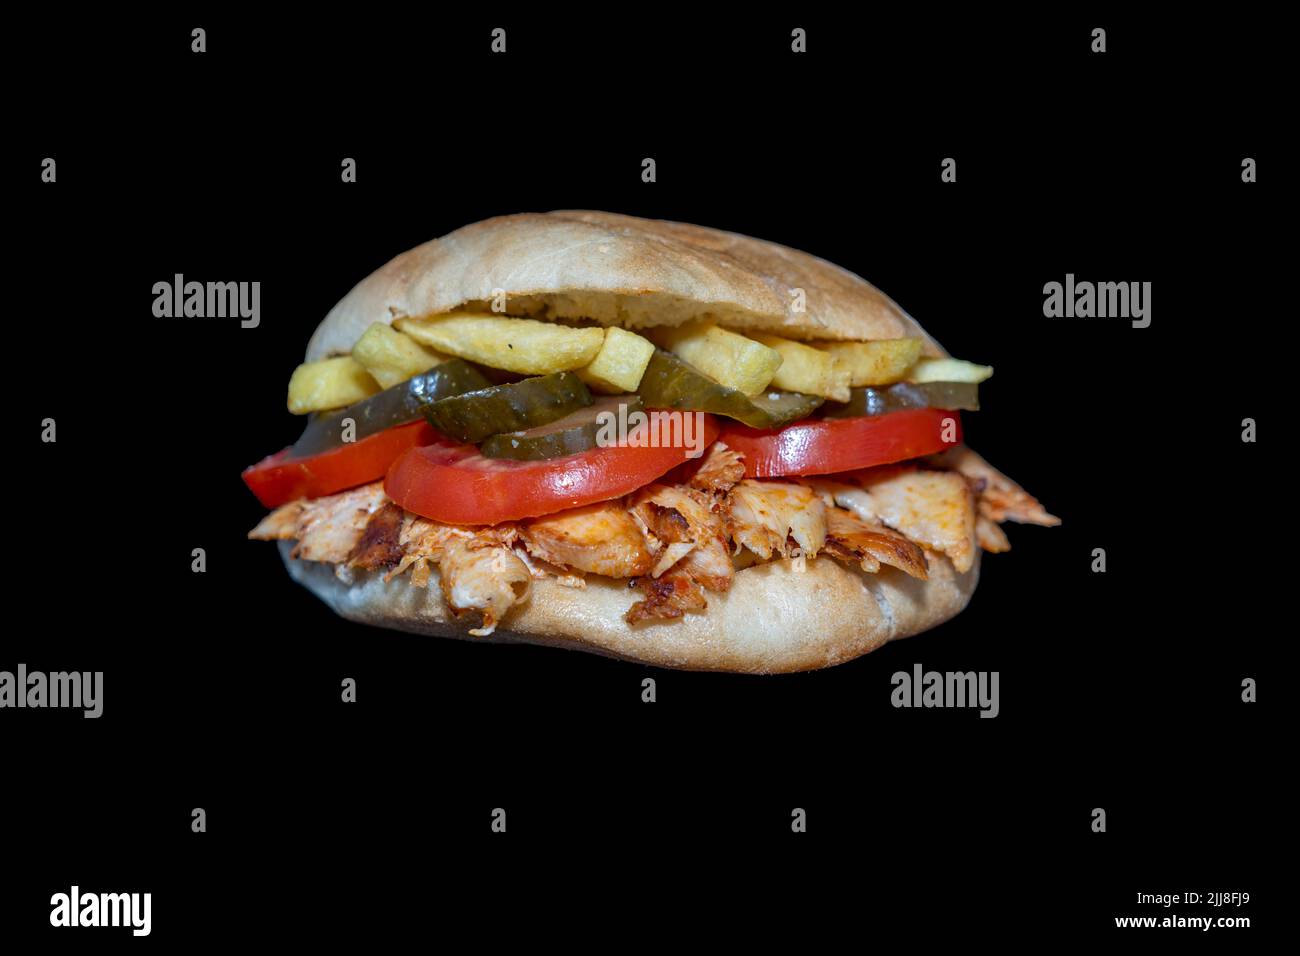 Döner chicken sandwich or Sandviç döner Isoläted. Stock Photo